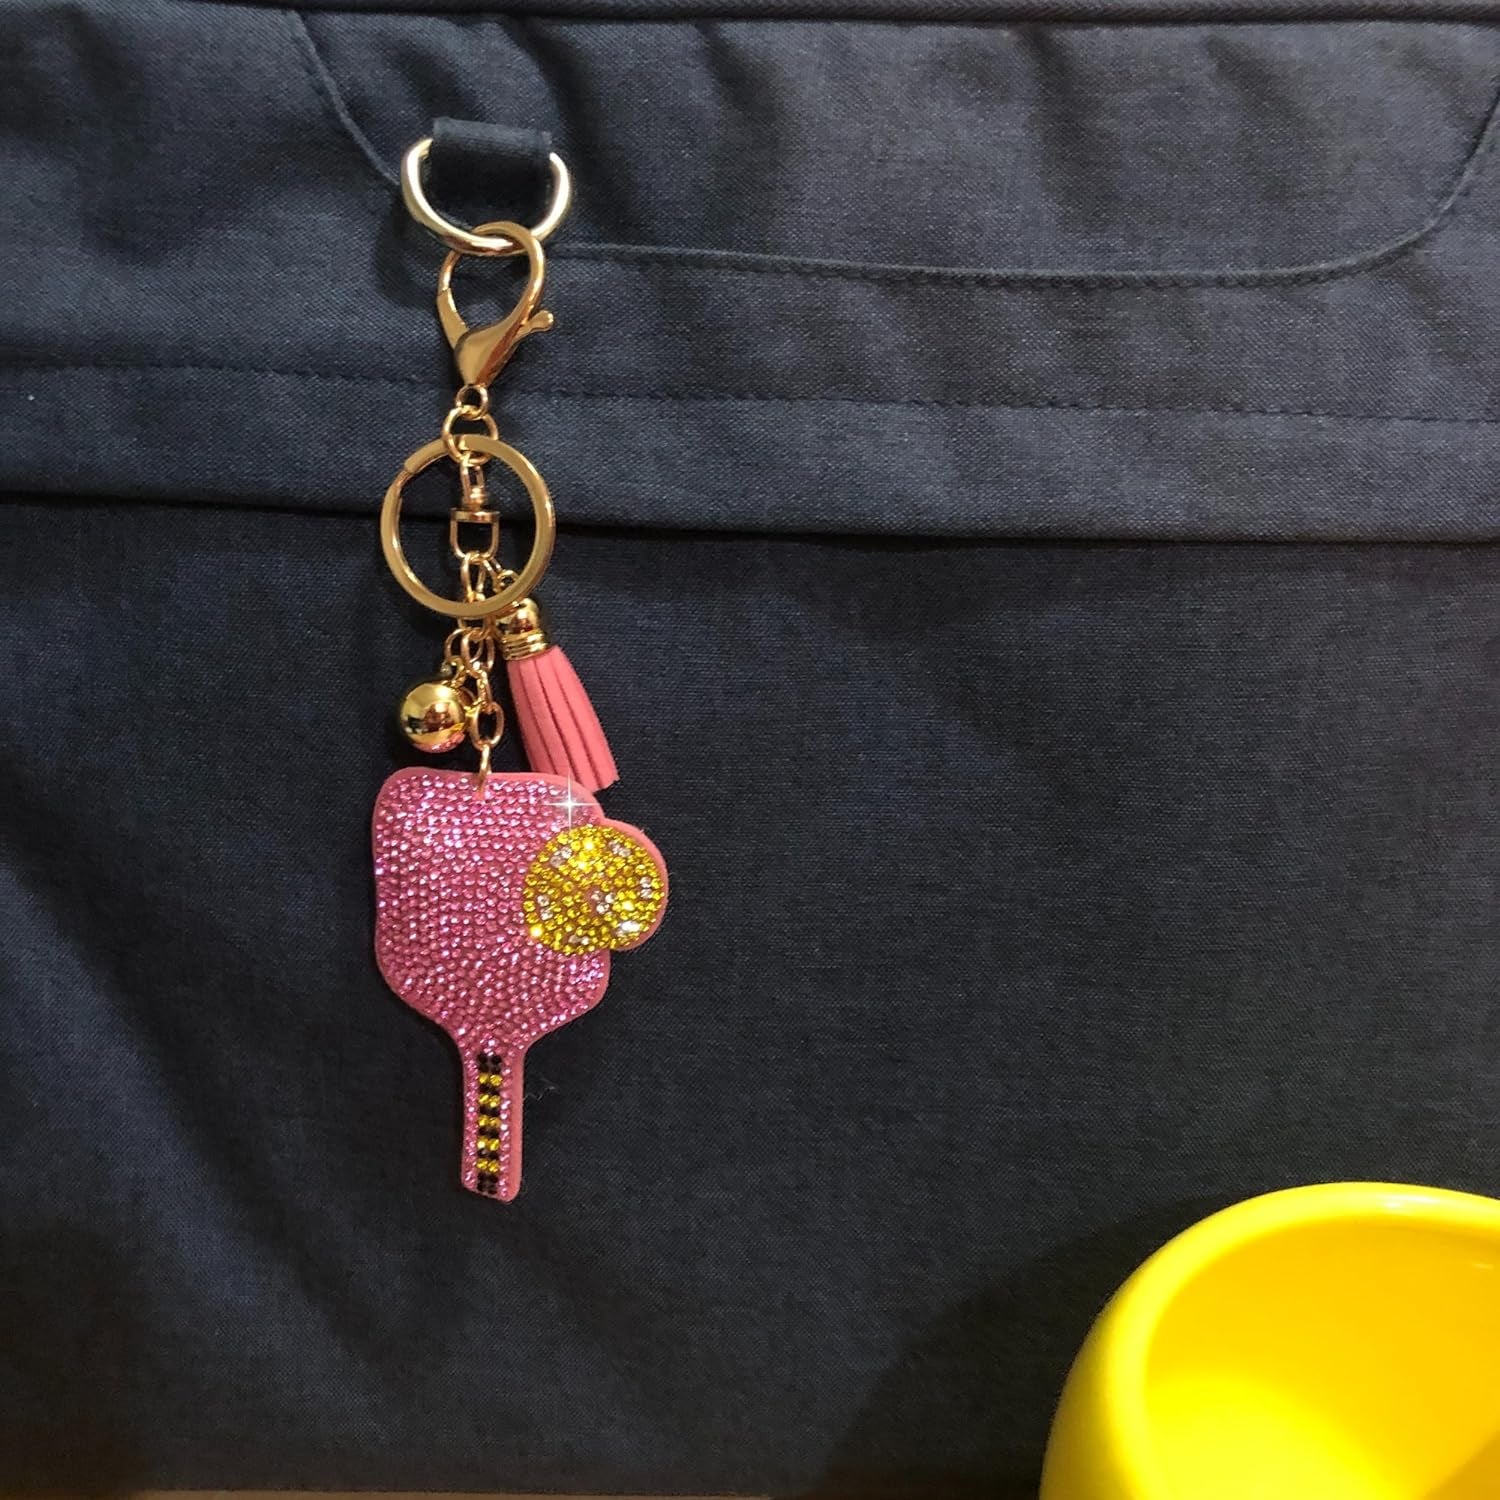 Rhinestone Keychain Accessories for Women, Car Keys Keychain Charms, Bling Keychain, Cute Purse Charms for Handbags